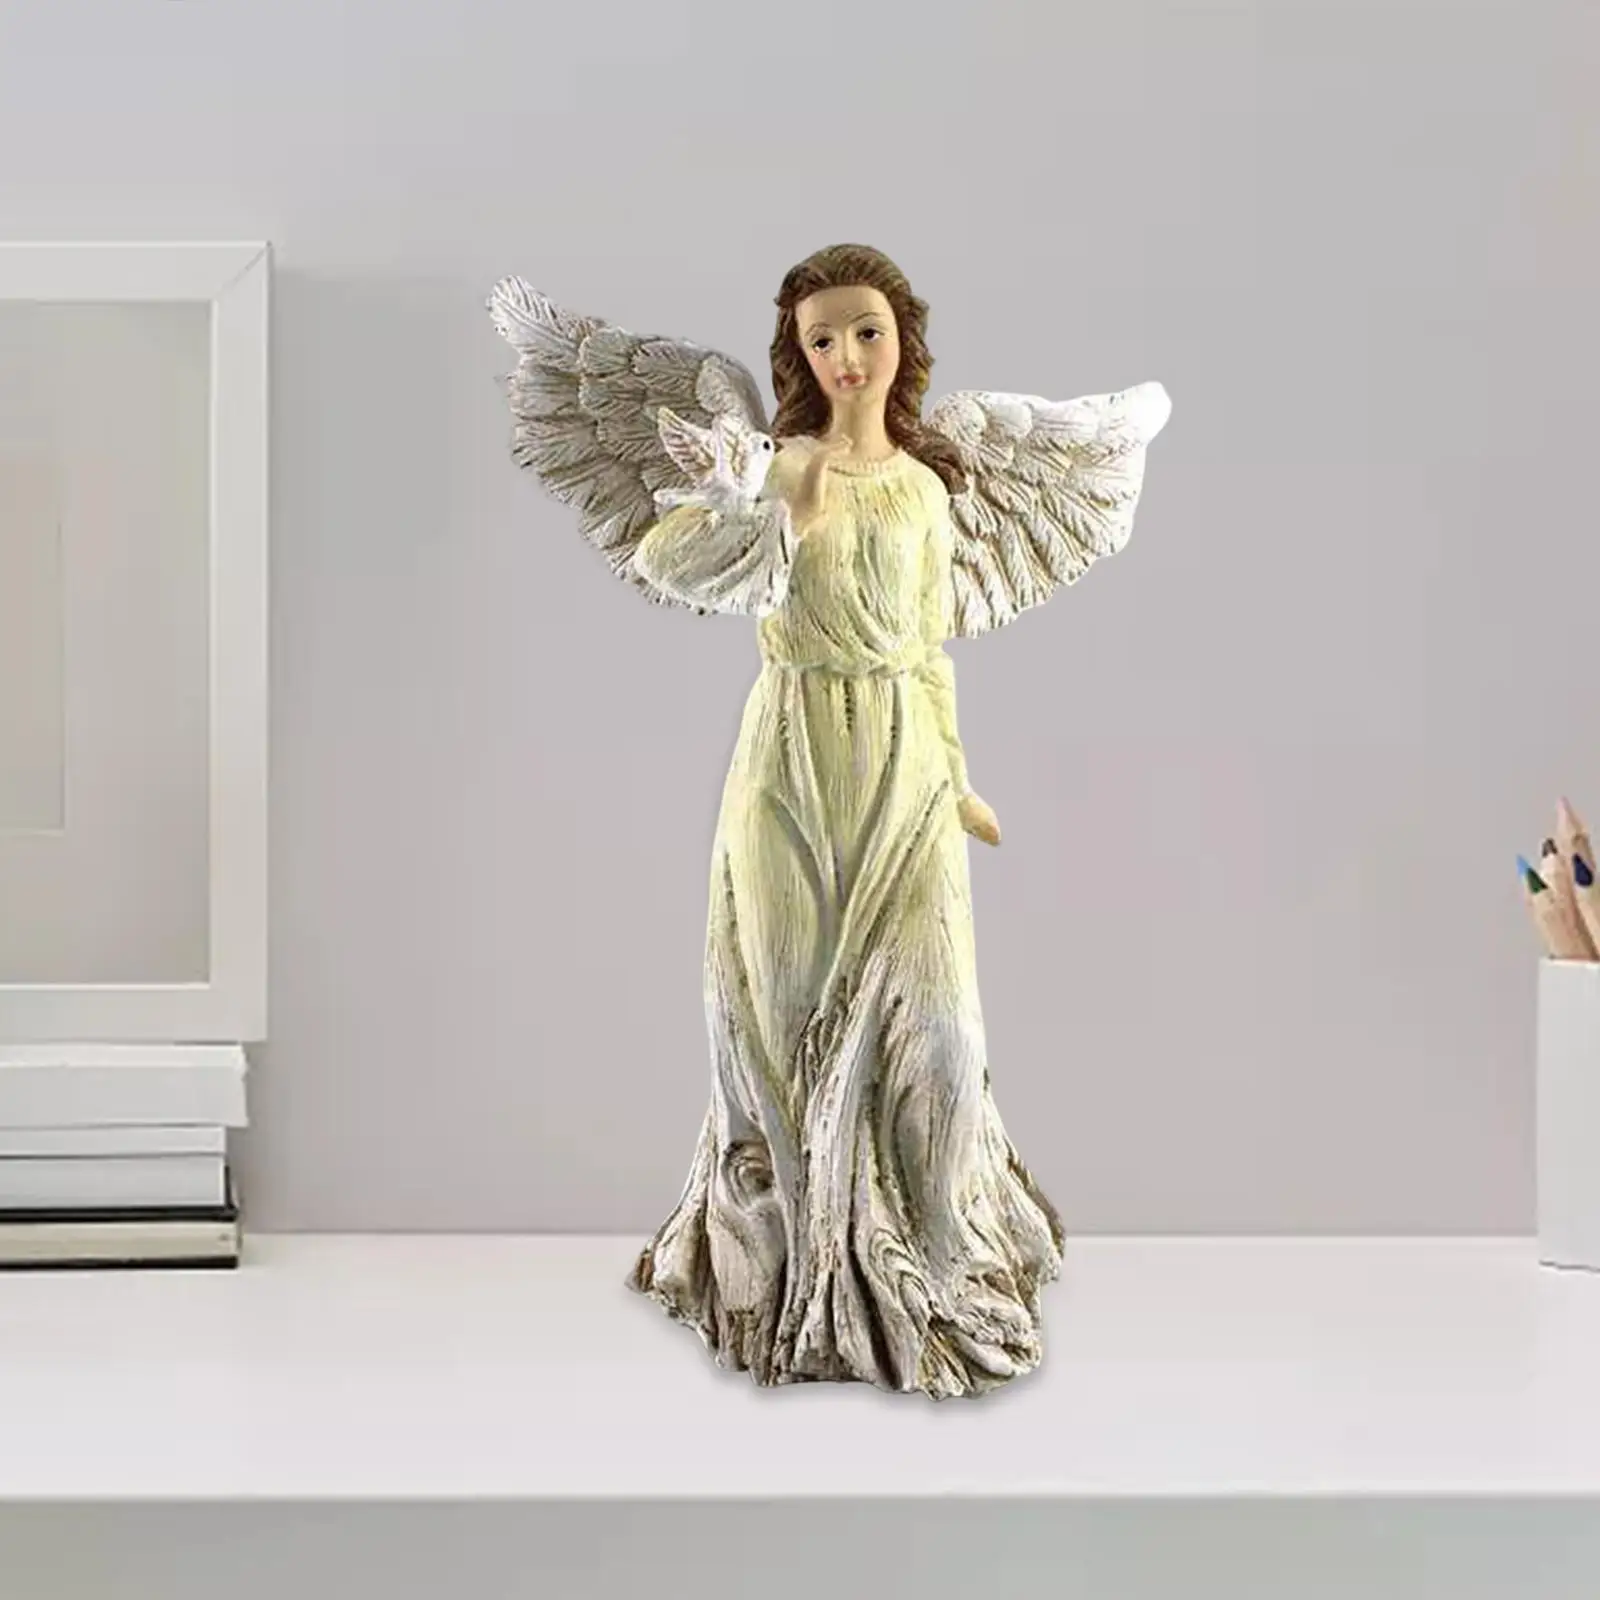 Miniature Angel Statue Resin Desktop Ornaments Art Crafts Handmade Modern Nordic Exquisite Details Art Ornaments for Pathway